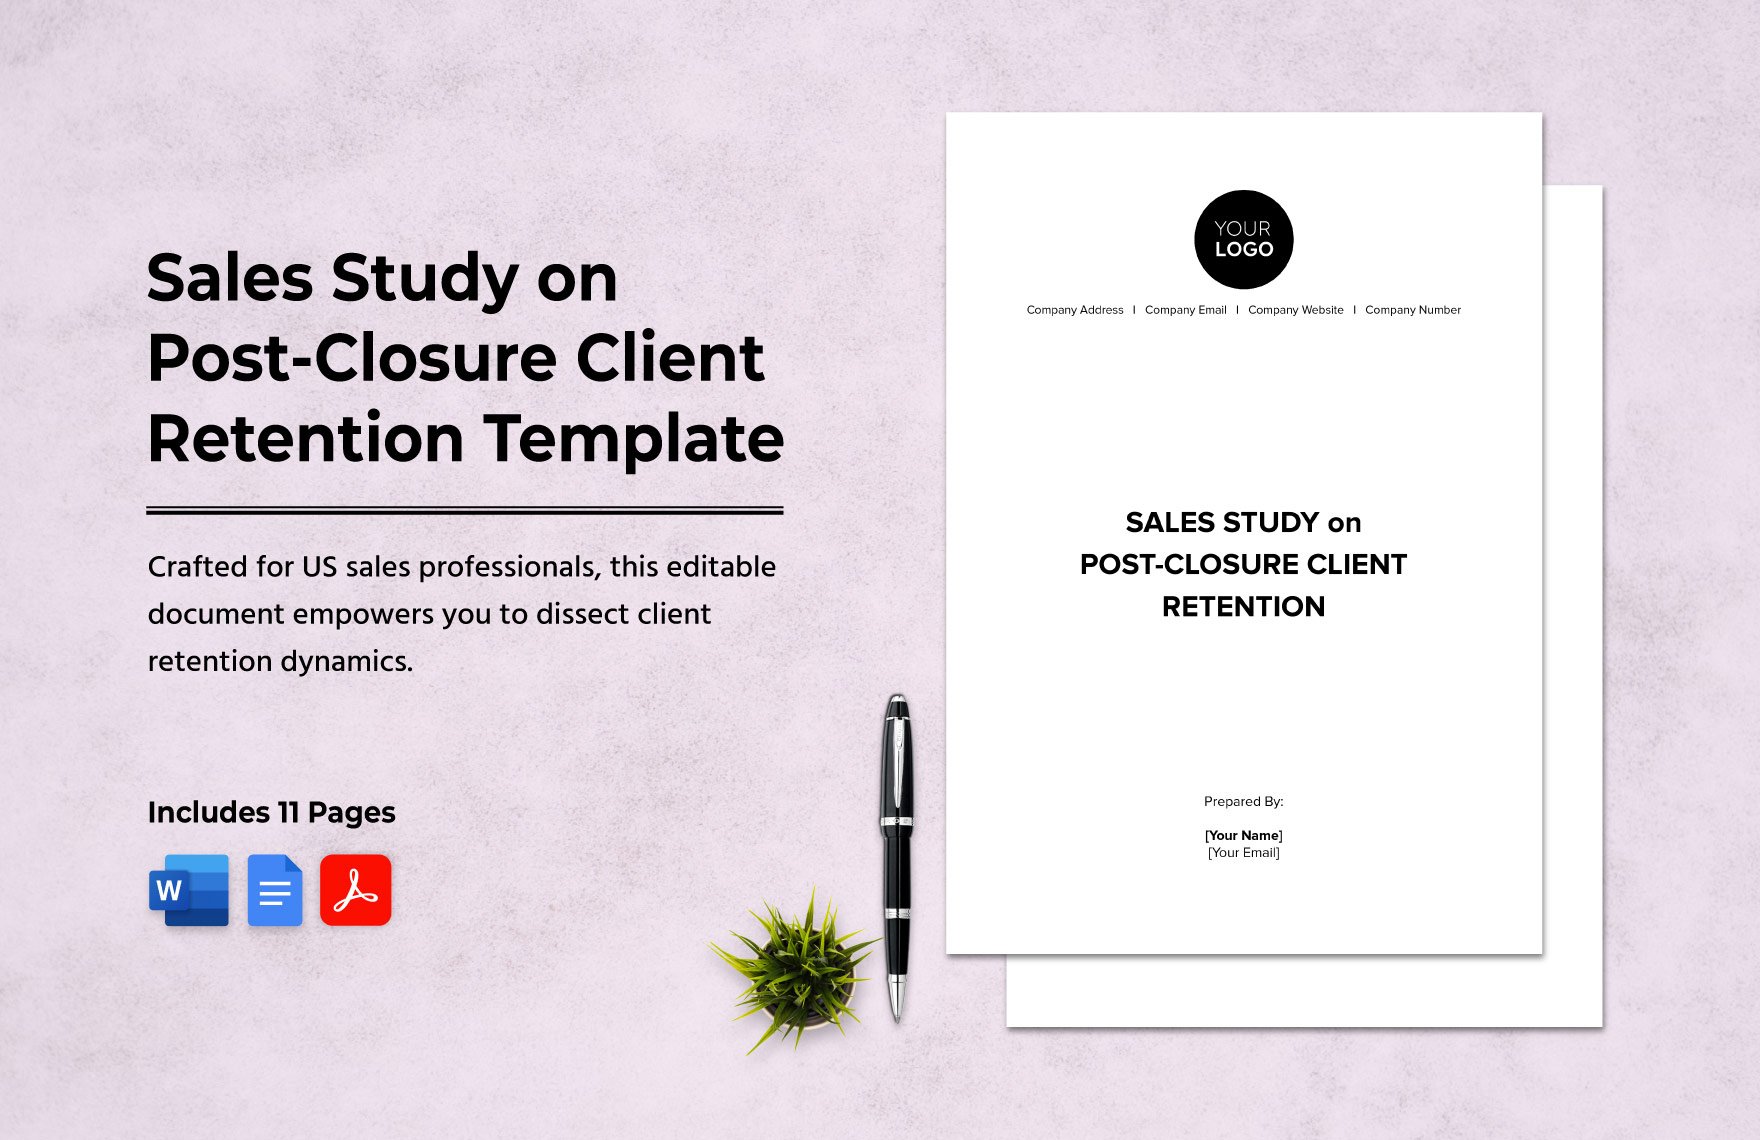 Sales Study on Post-Closure Client Retention Template